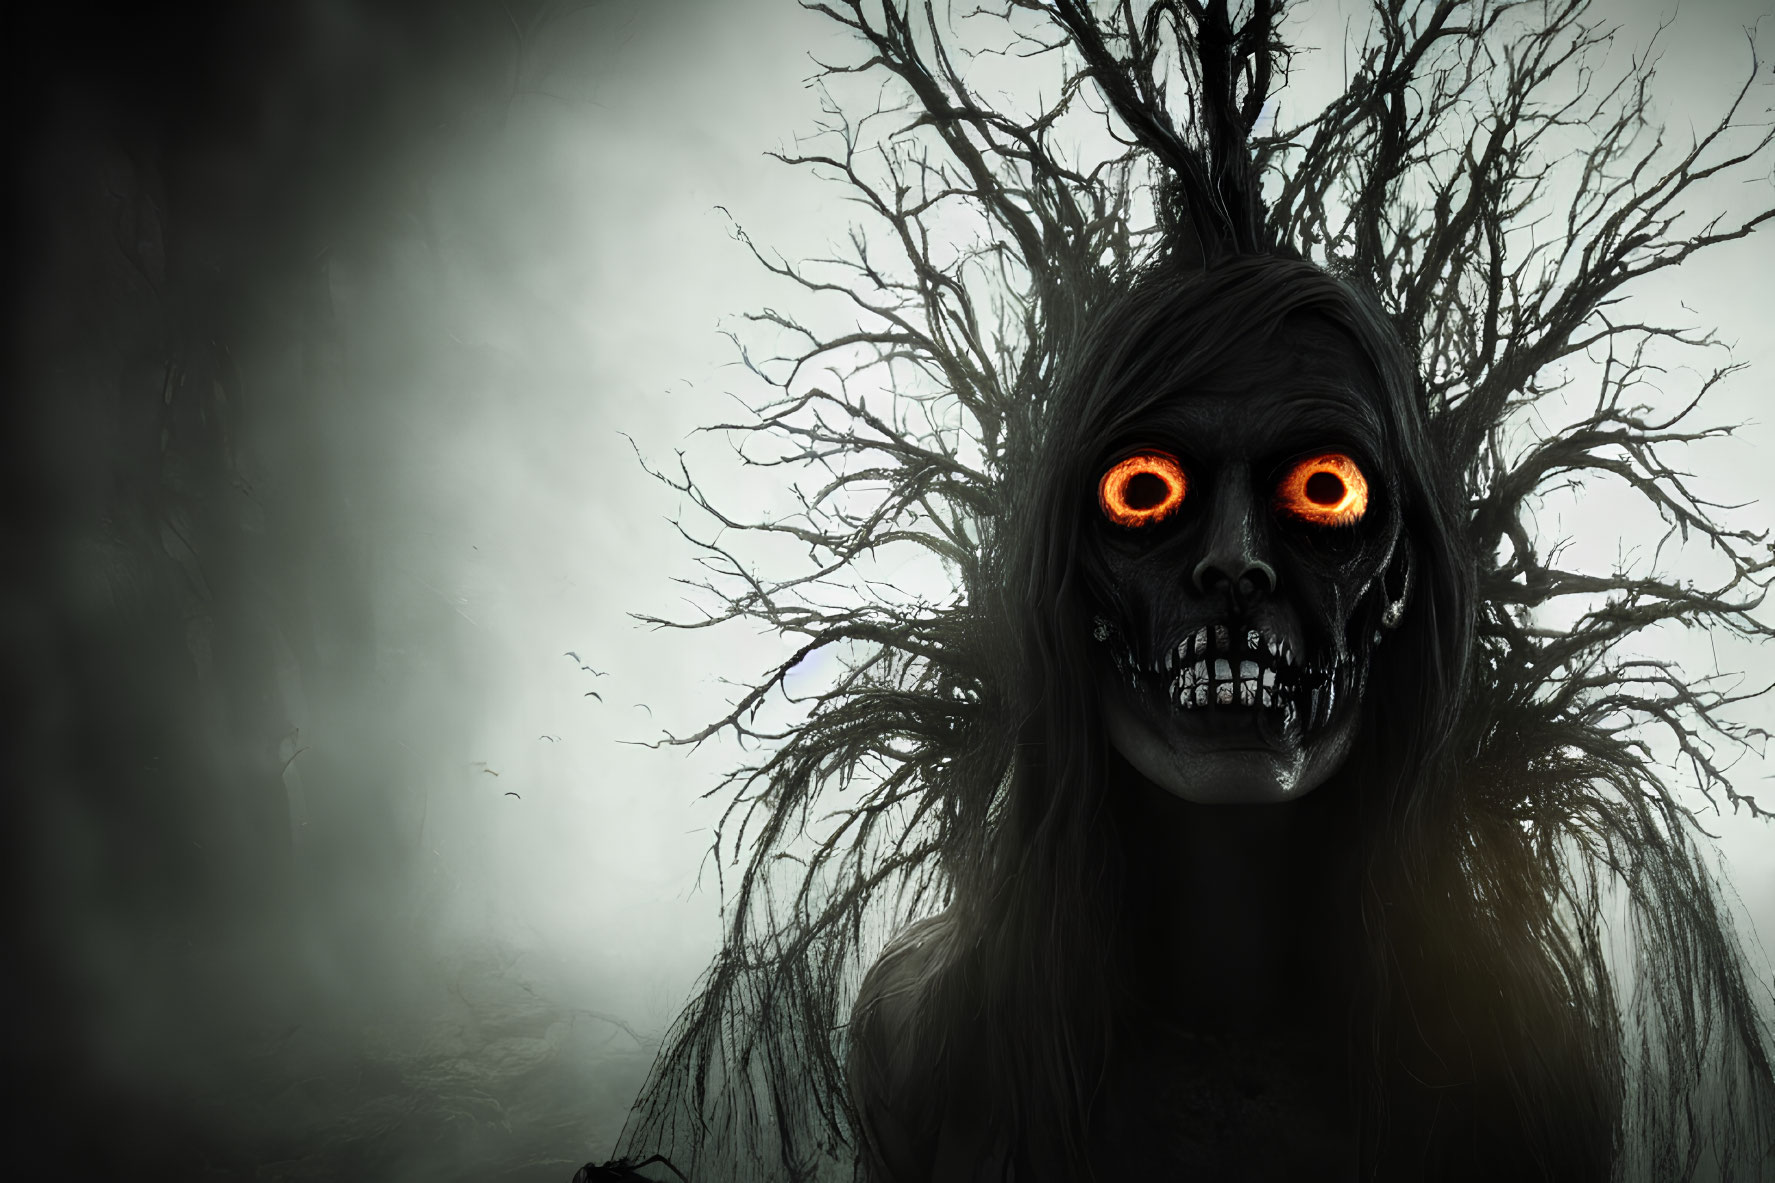 Spooky skeletal figure with glowing eyes and branch hair on dark misty backdrop